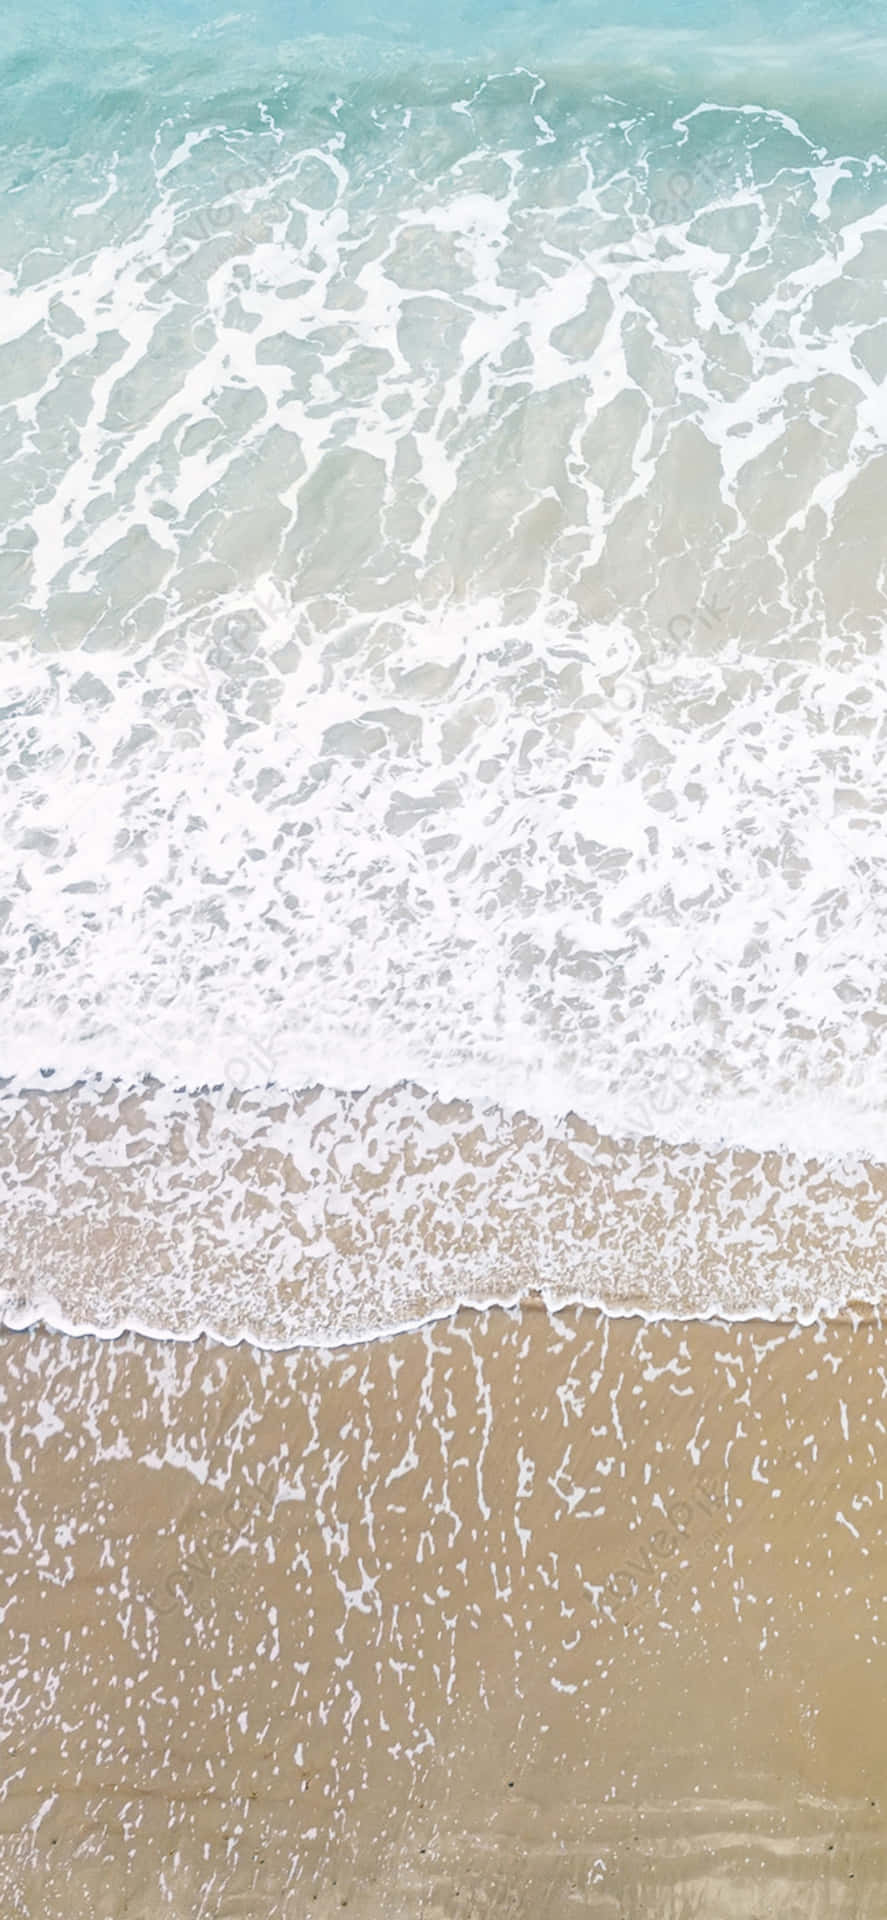 Captivating Iphone X Wallpaper Capturing An Exhilarating Beach Format